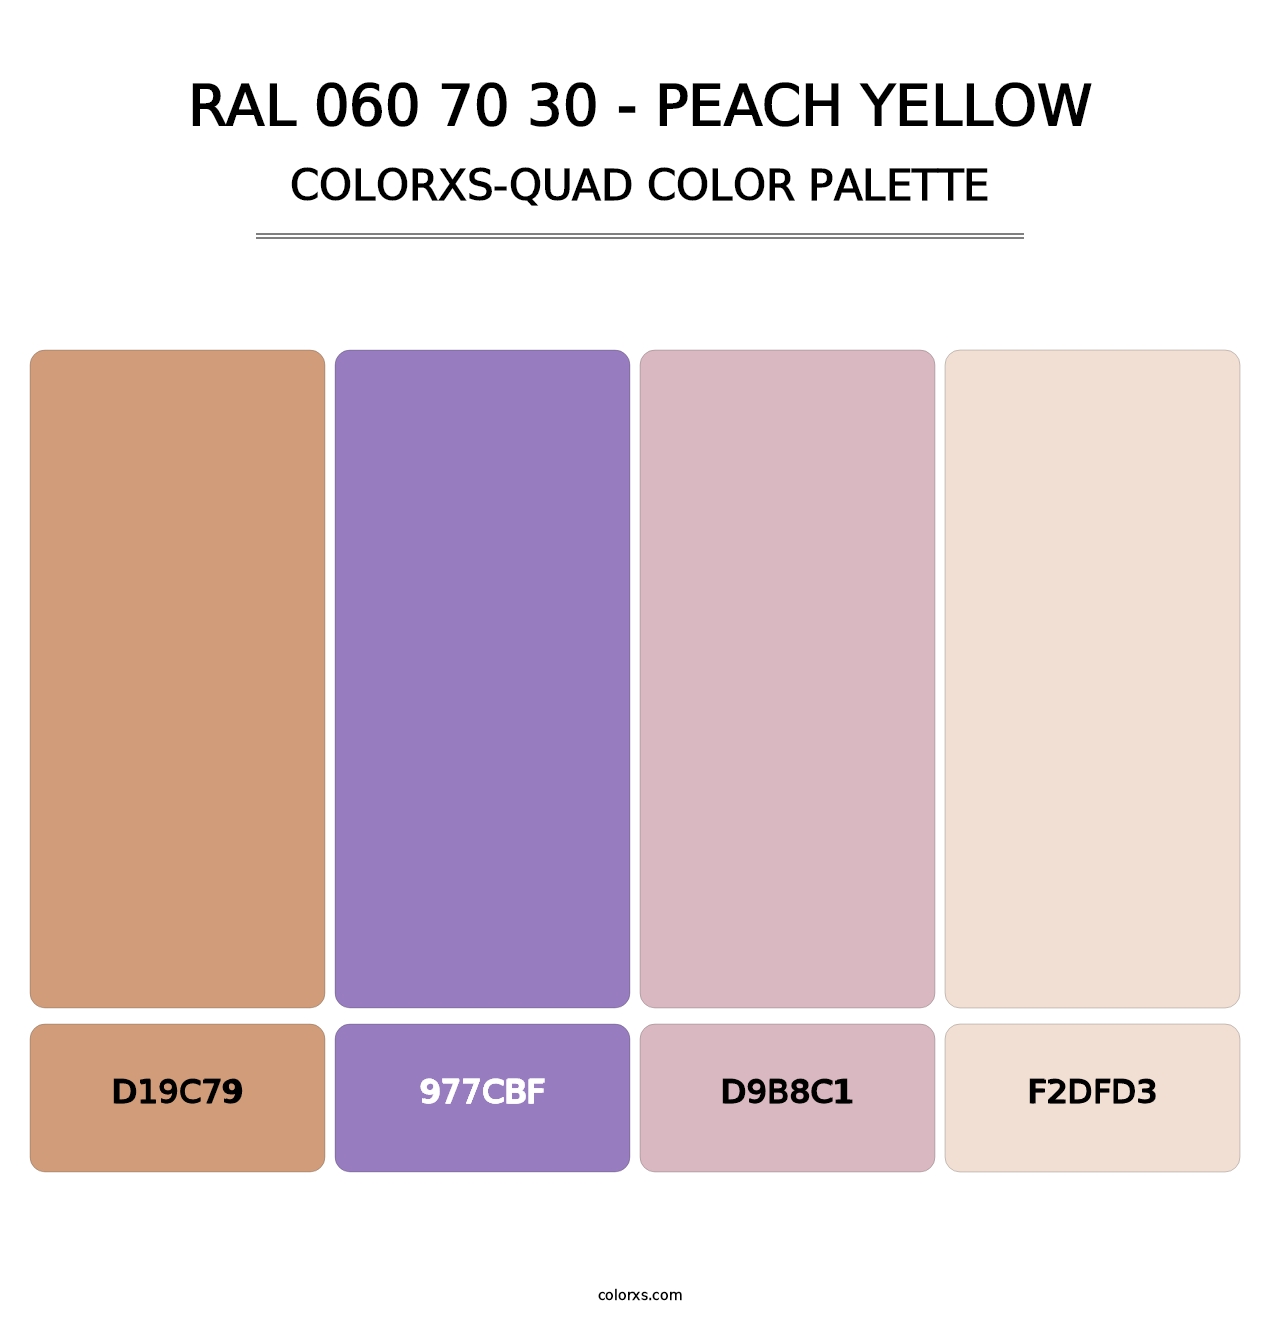 RAL 060 70 30 - Peach Yellow - Colorxs Quad Palette